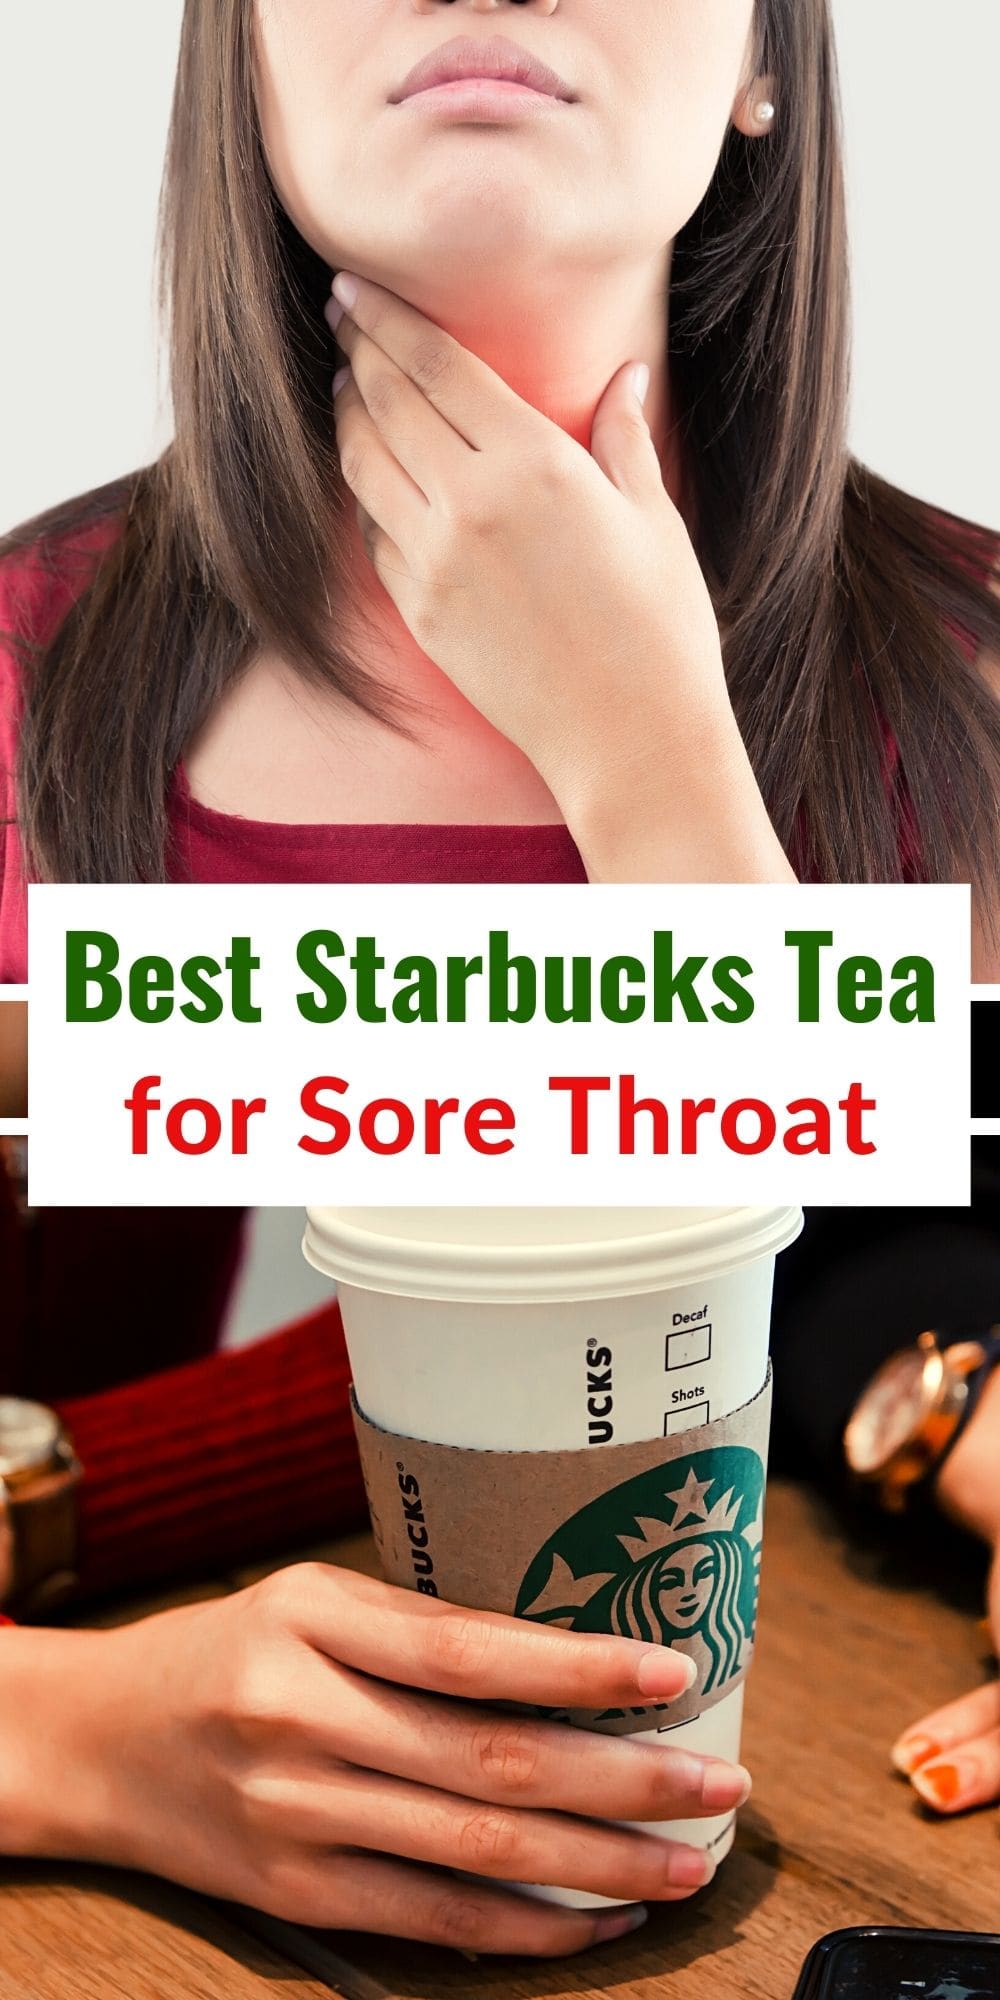 Starbucks Teas for a Sore Throat